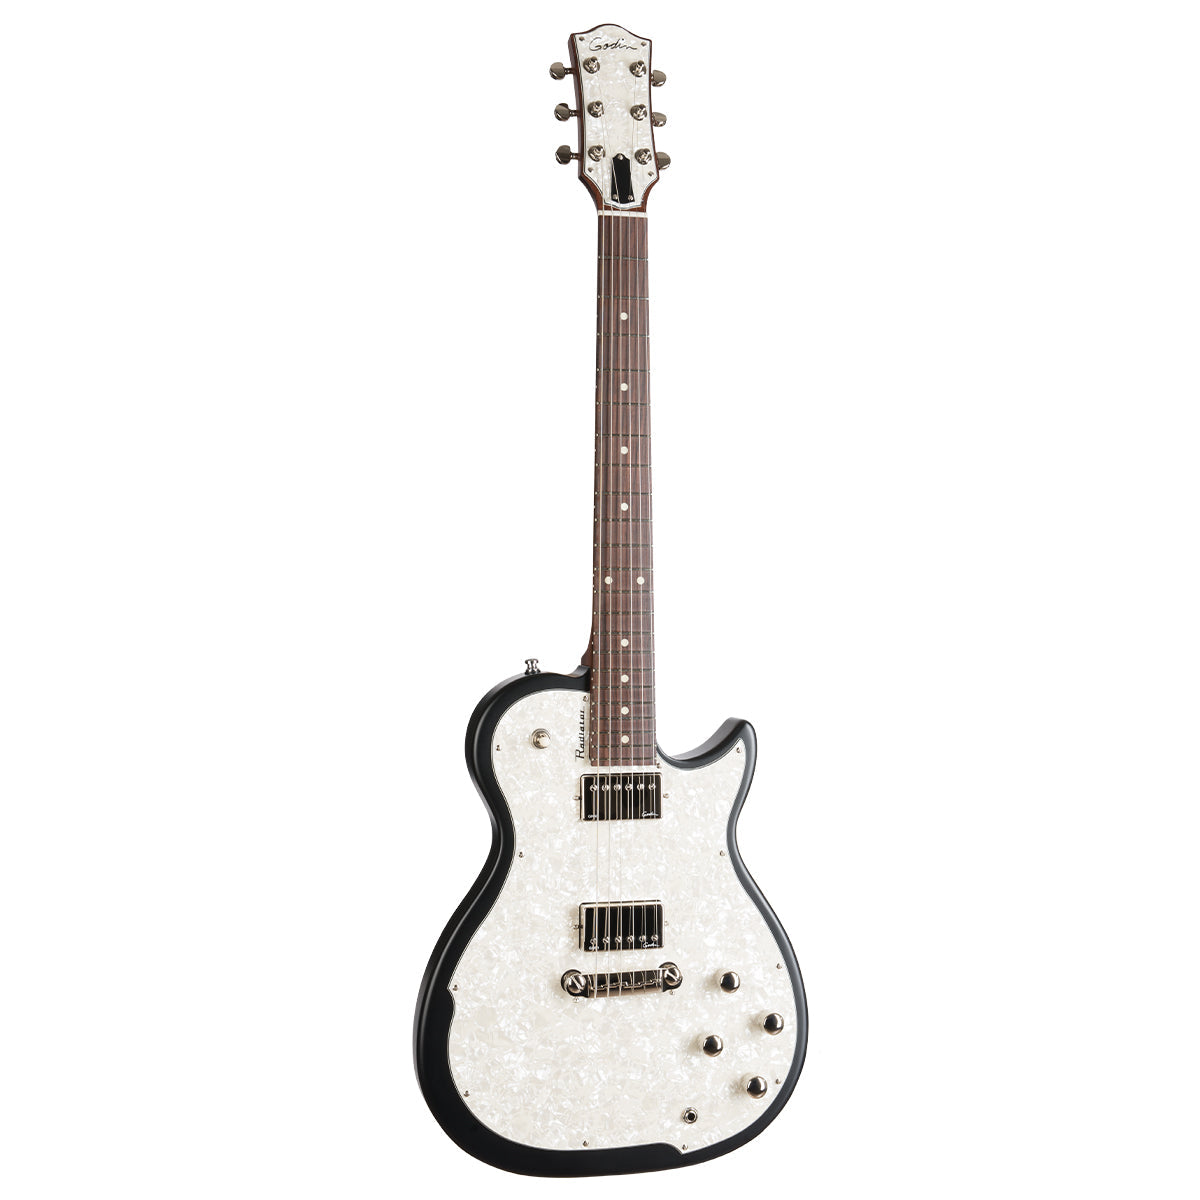 Godin Radiator Electric Guitar ~ Bourbon Burst RN, Electric Guitar for sale at Richards Guitars.